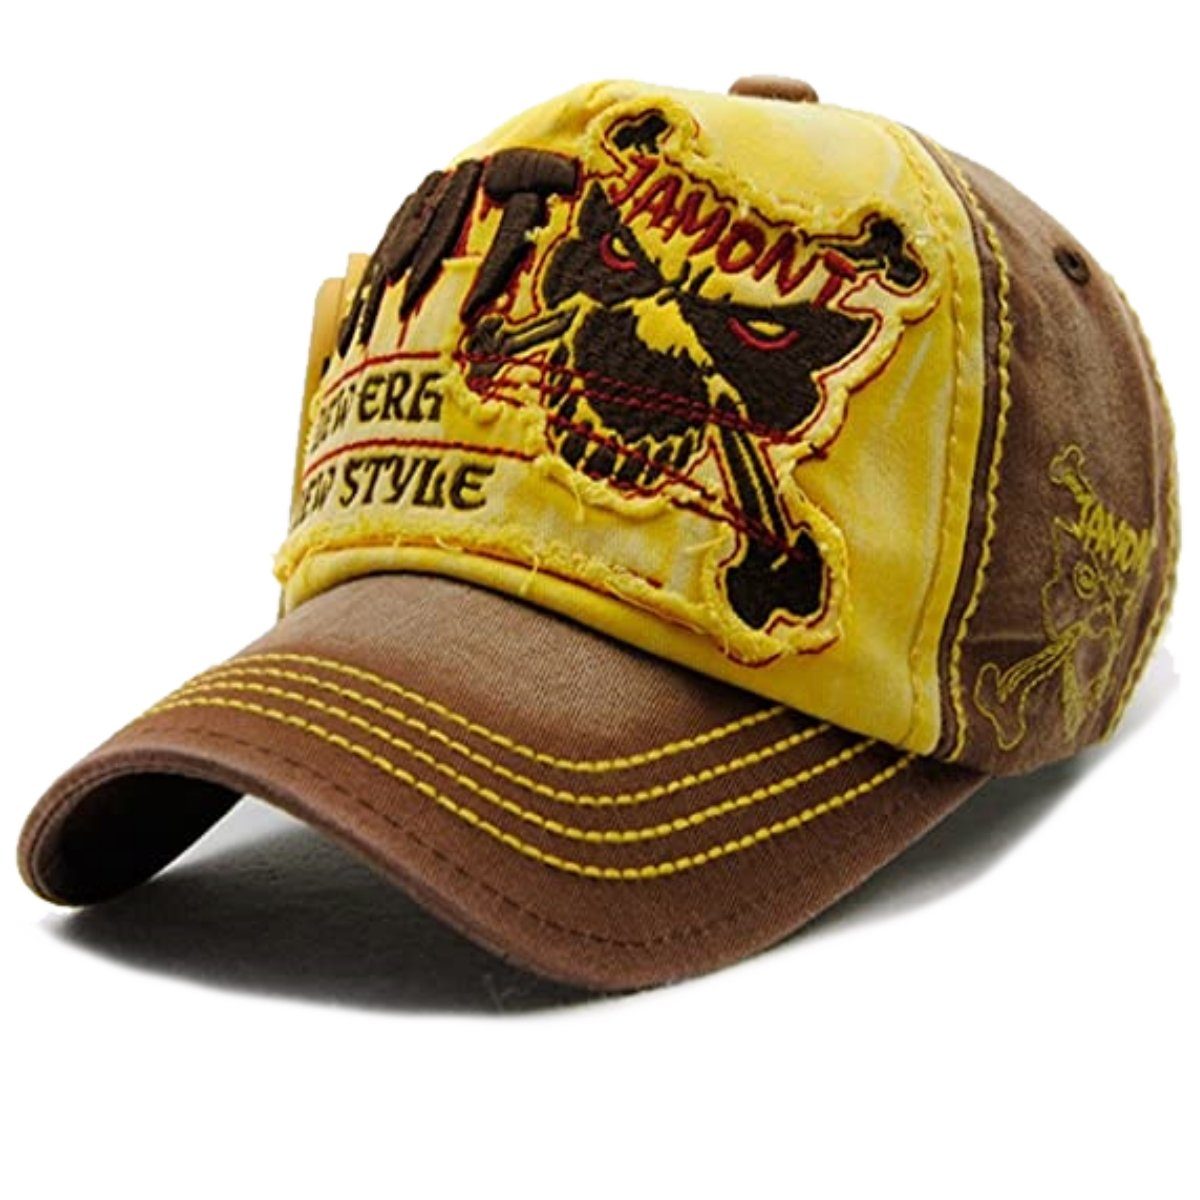 Sporty Baseball Cap Fight Skull Vintage Style Used Washed Look Retro Kappe Cap mit Belüftungslöchern gelb